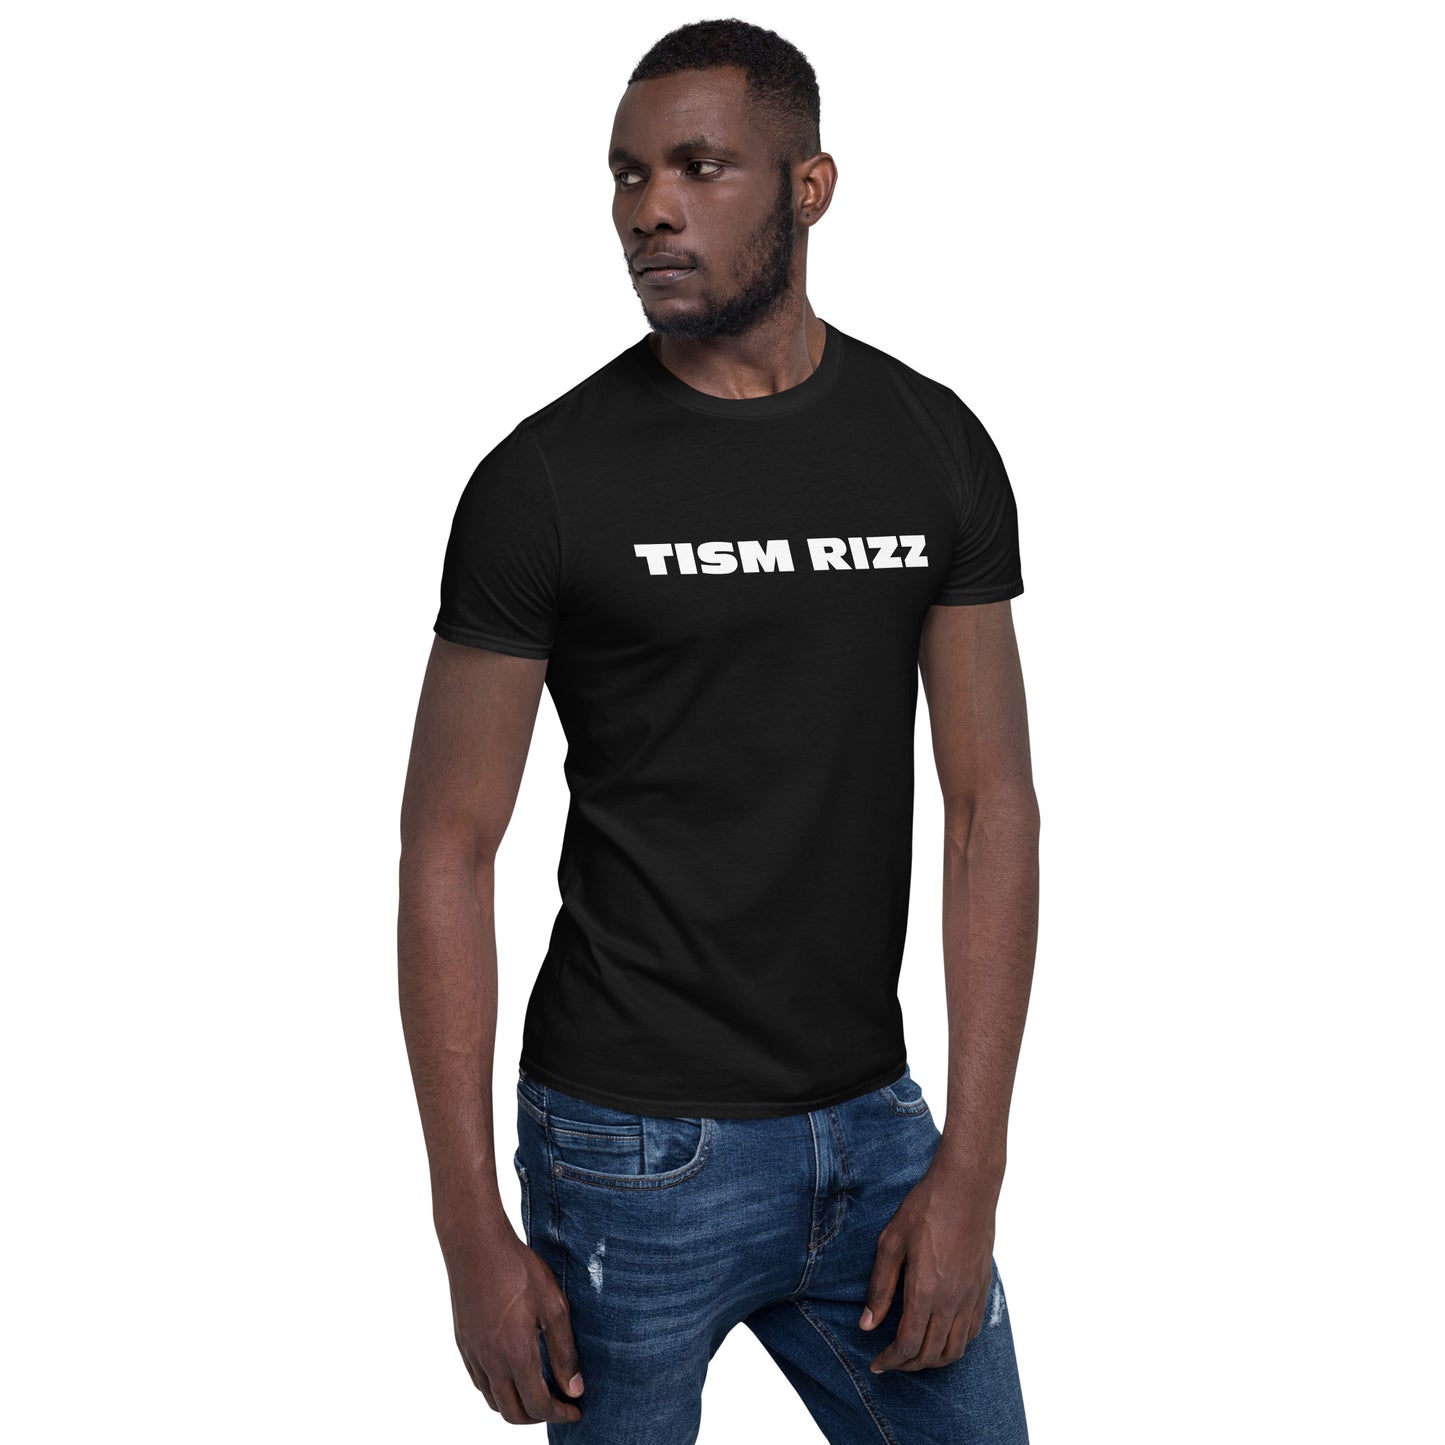 Tism Rizz - Short-Sleeve Unisex T-Shirt